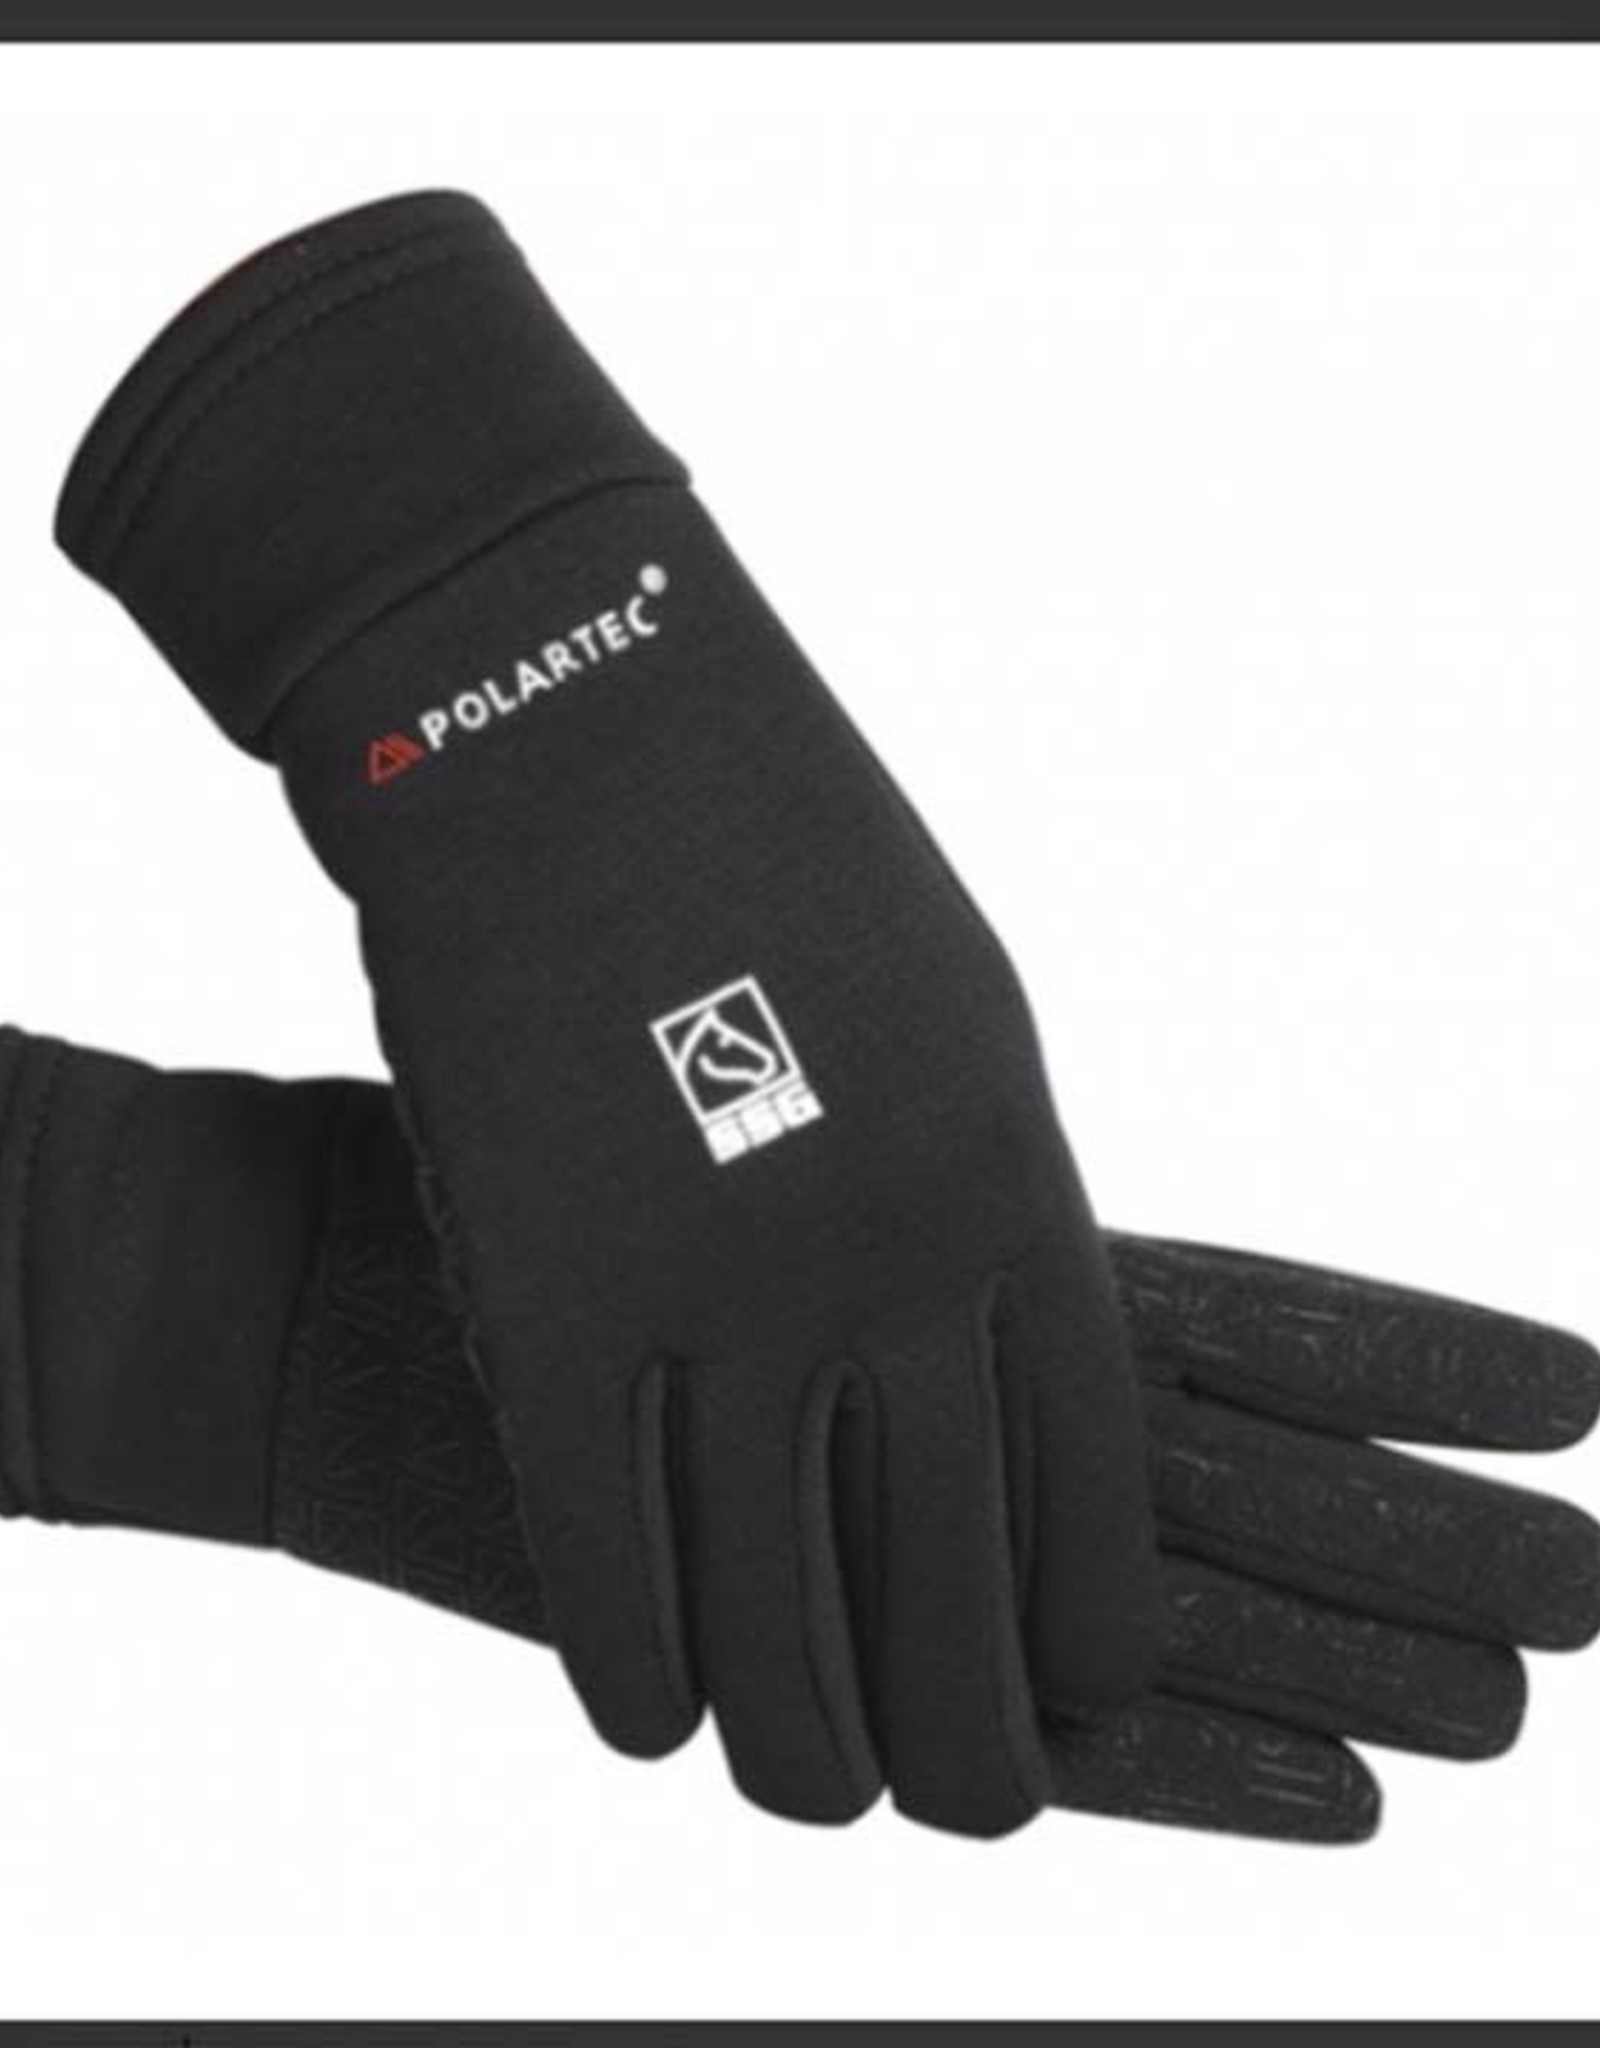 SSG Winter All Sport Gloves